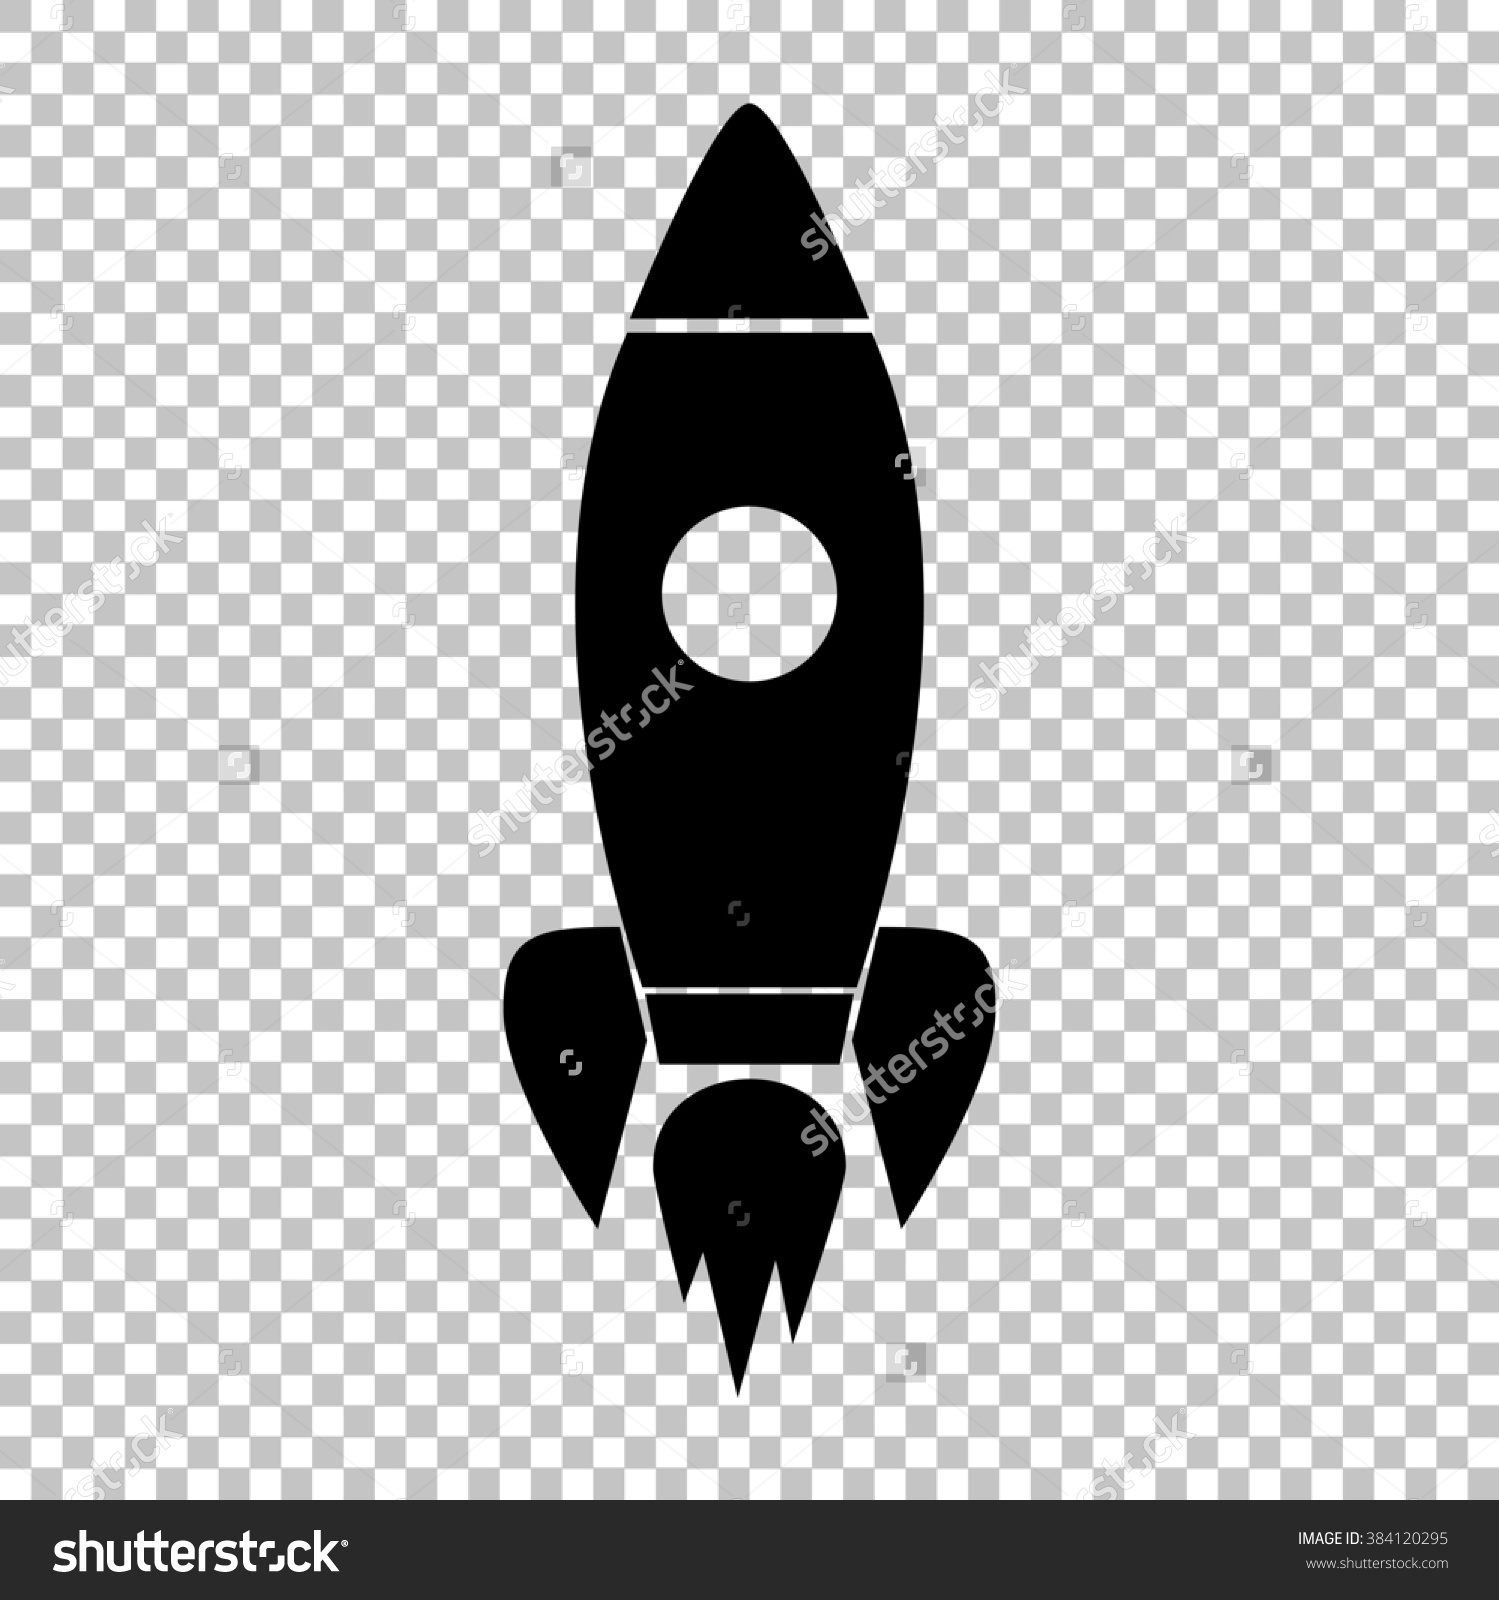 Rocket Sign Flat Style Icon On Stock Illustration 384120295.